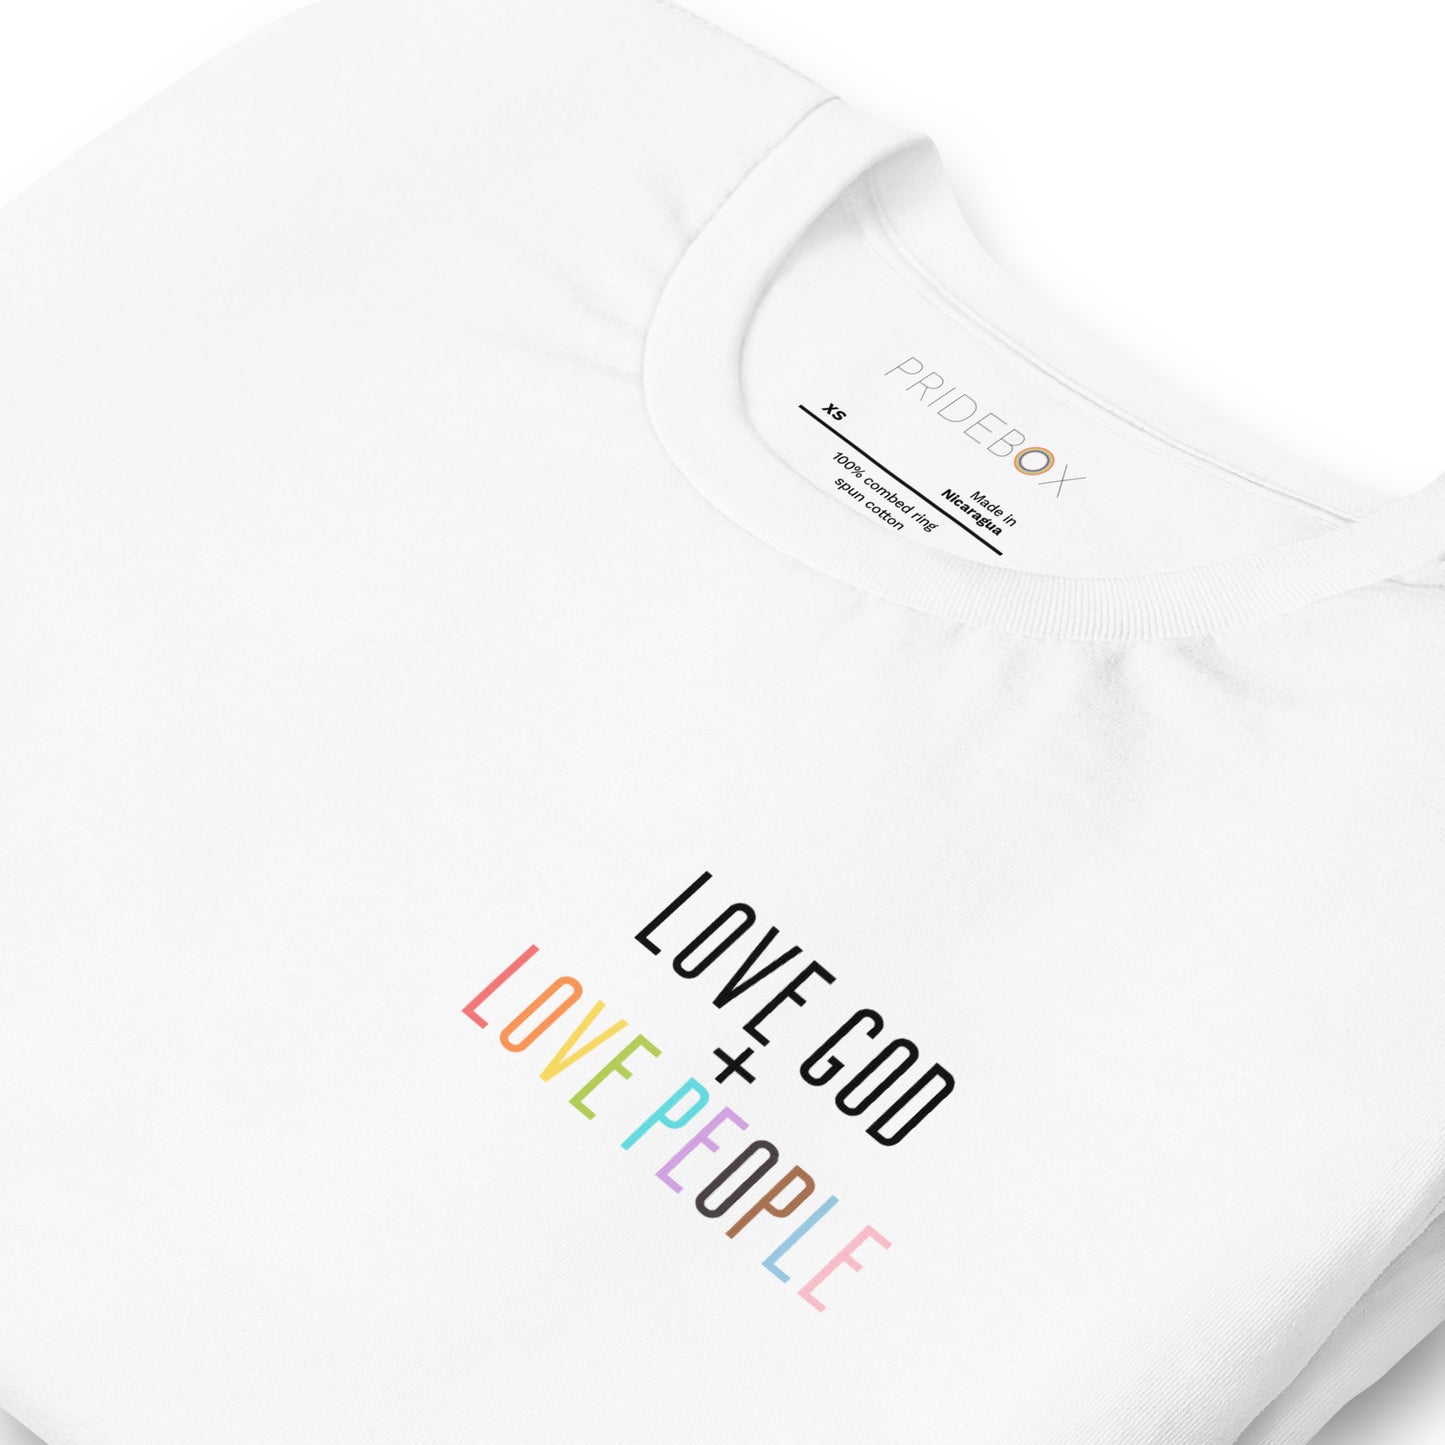 Love God + Love People Unisex T-shirt - White